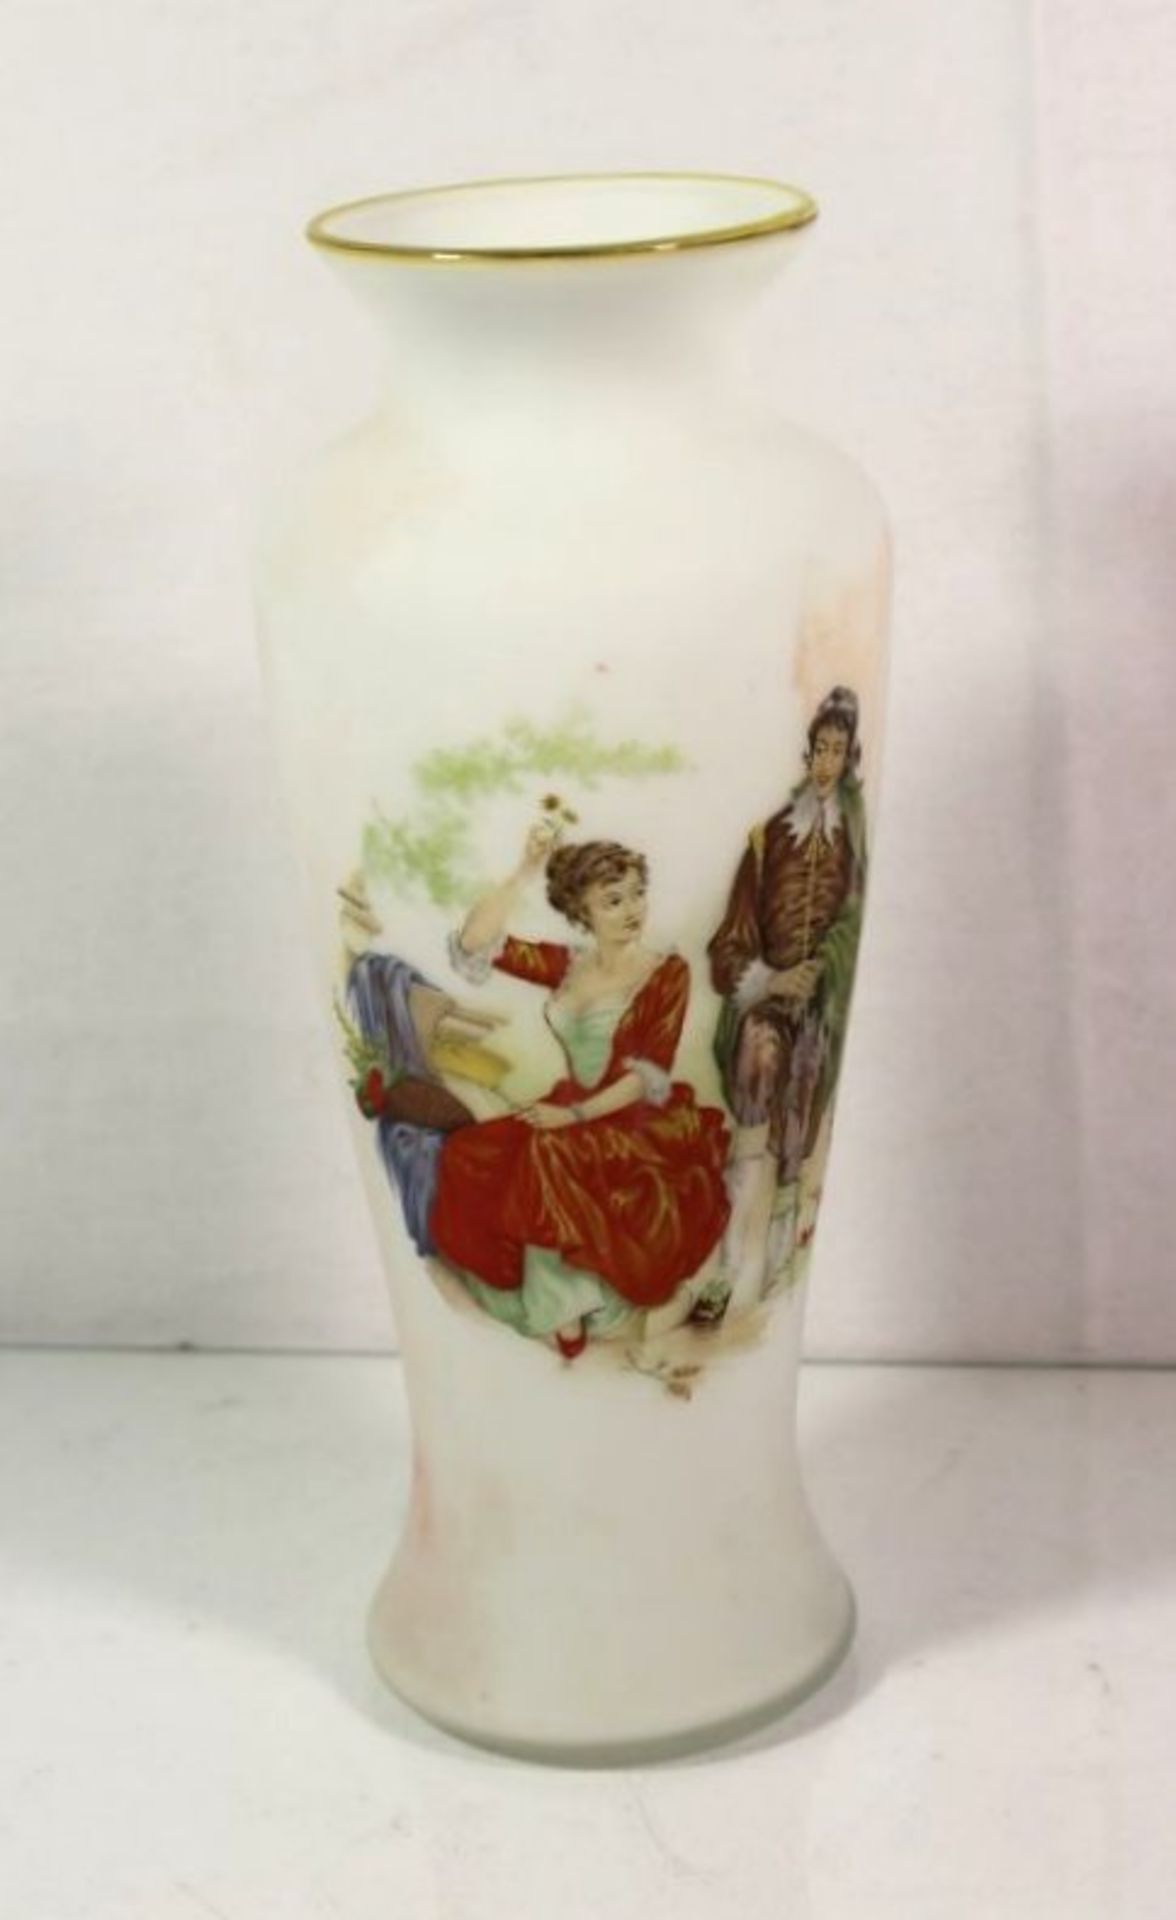 hohe Milchglas-Vase, galantes Paar, H-25cm.- - -22.61 % buyer's premium on the hammer priceVAT